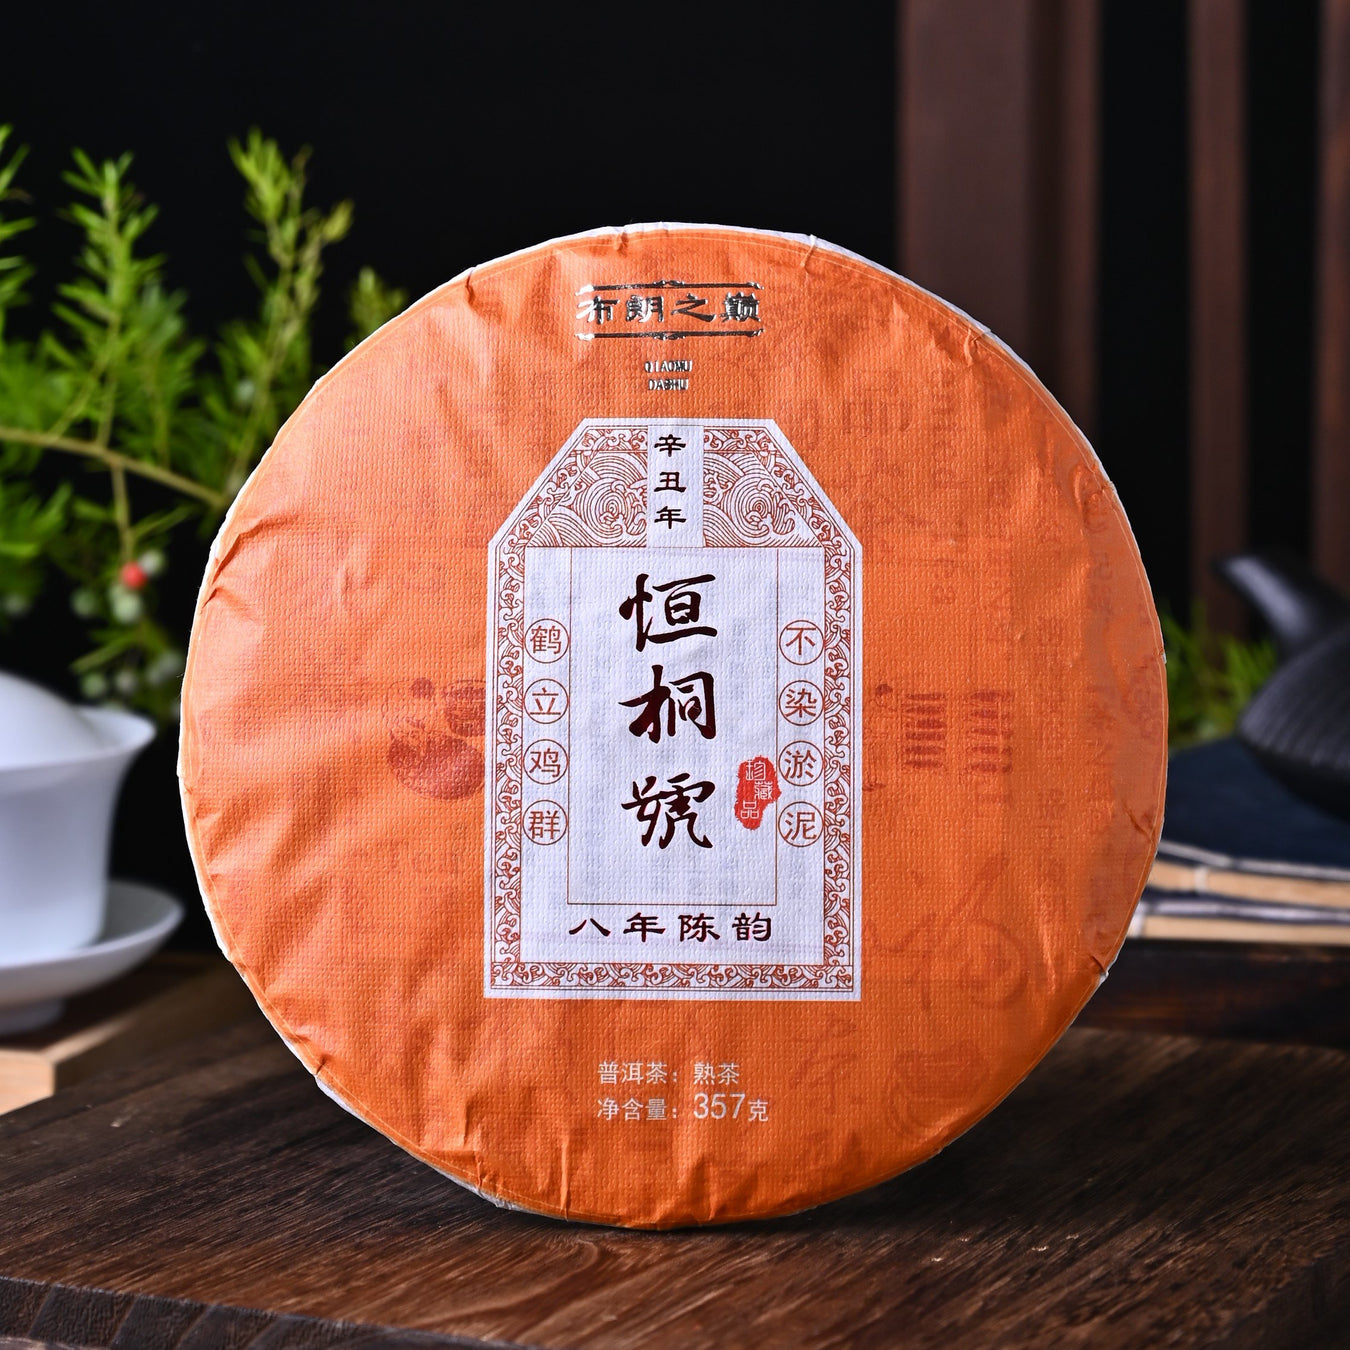 Heng Tong Hao Brand Pu-erh Tea